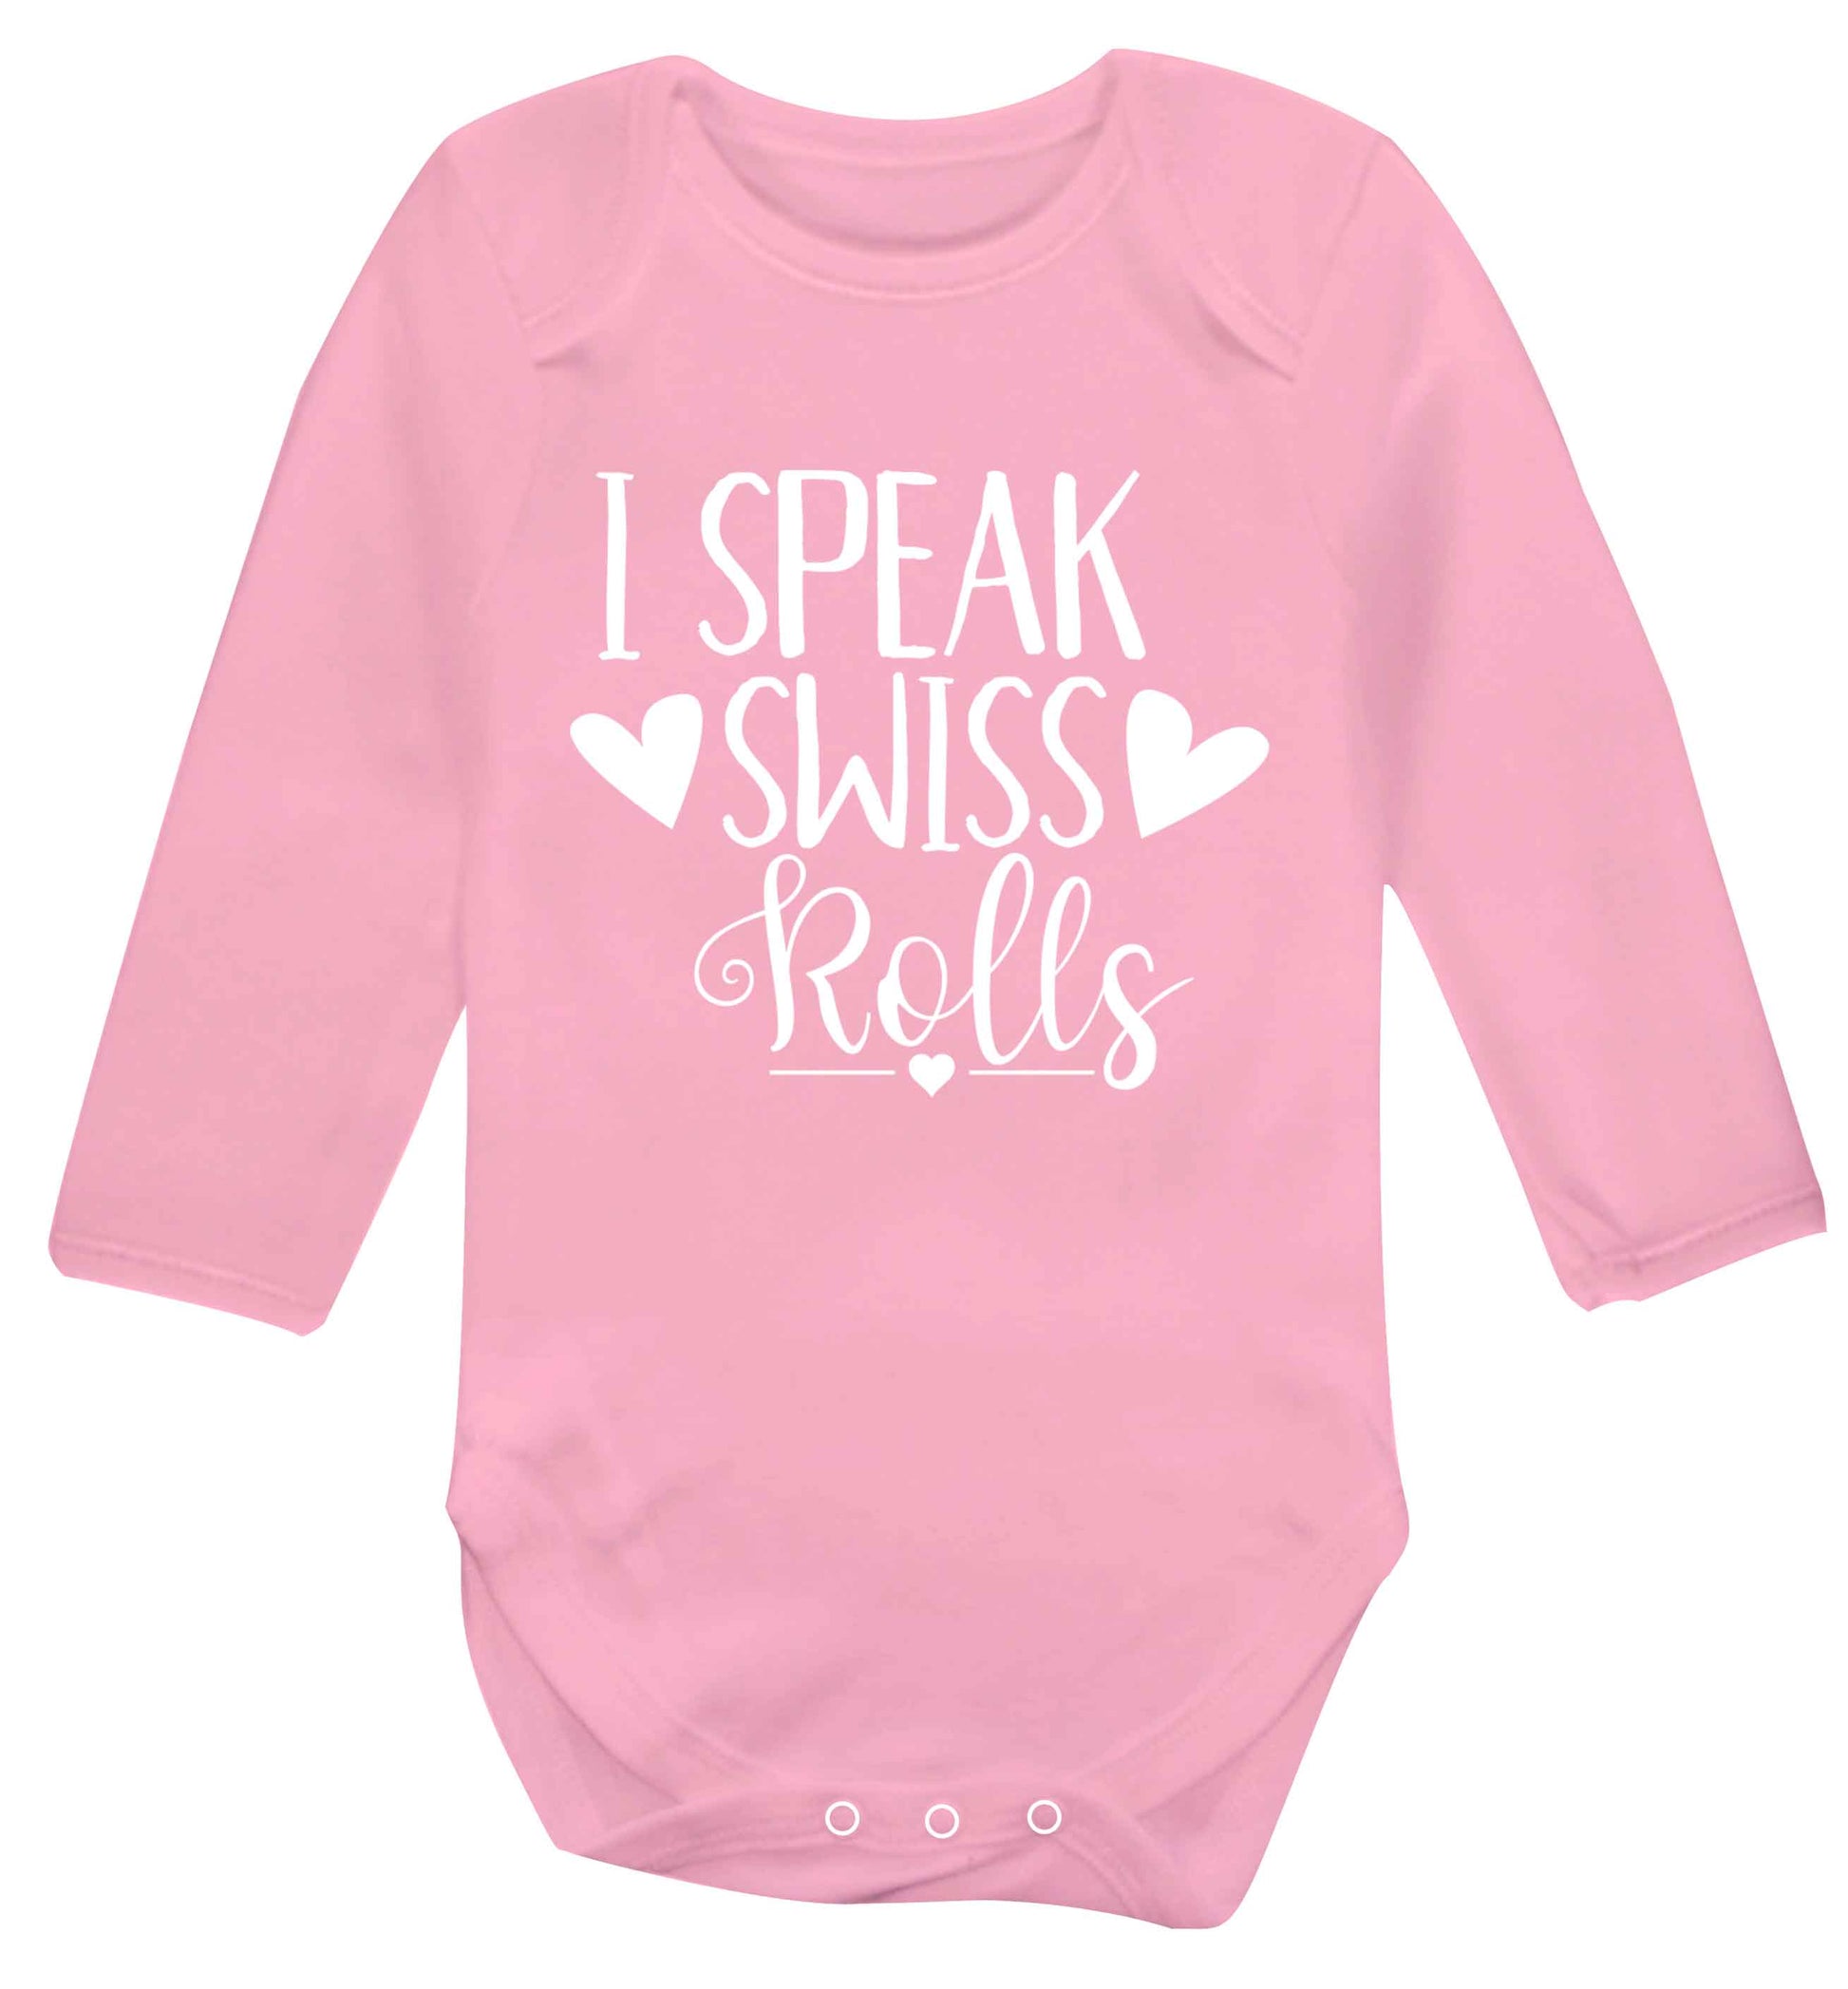 I speak swiss..rolls Baby Vest long sleeved pale pink 6-12 months